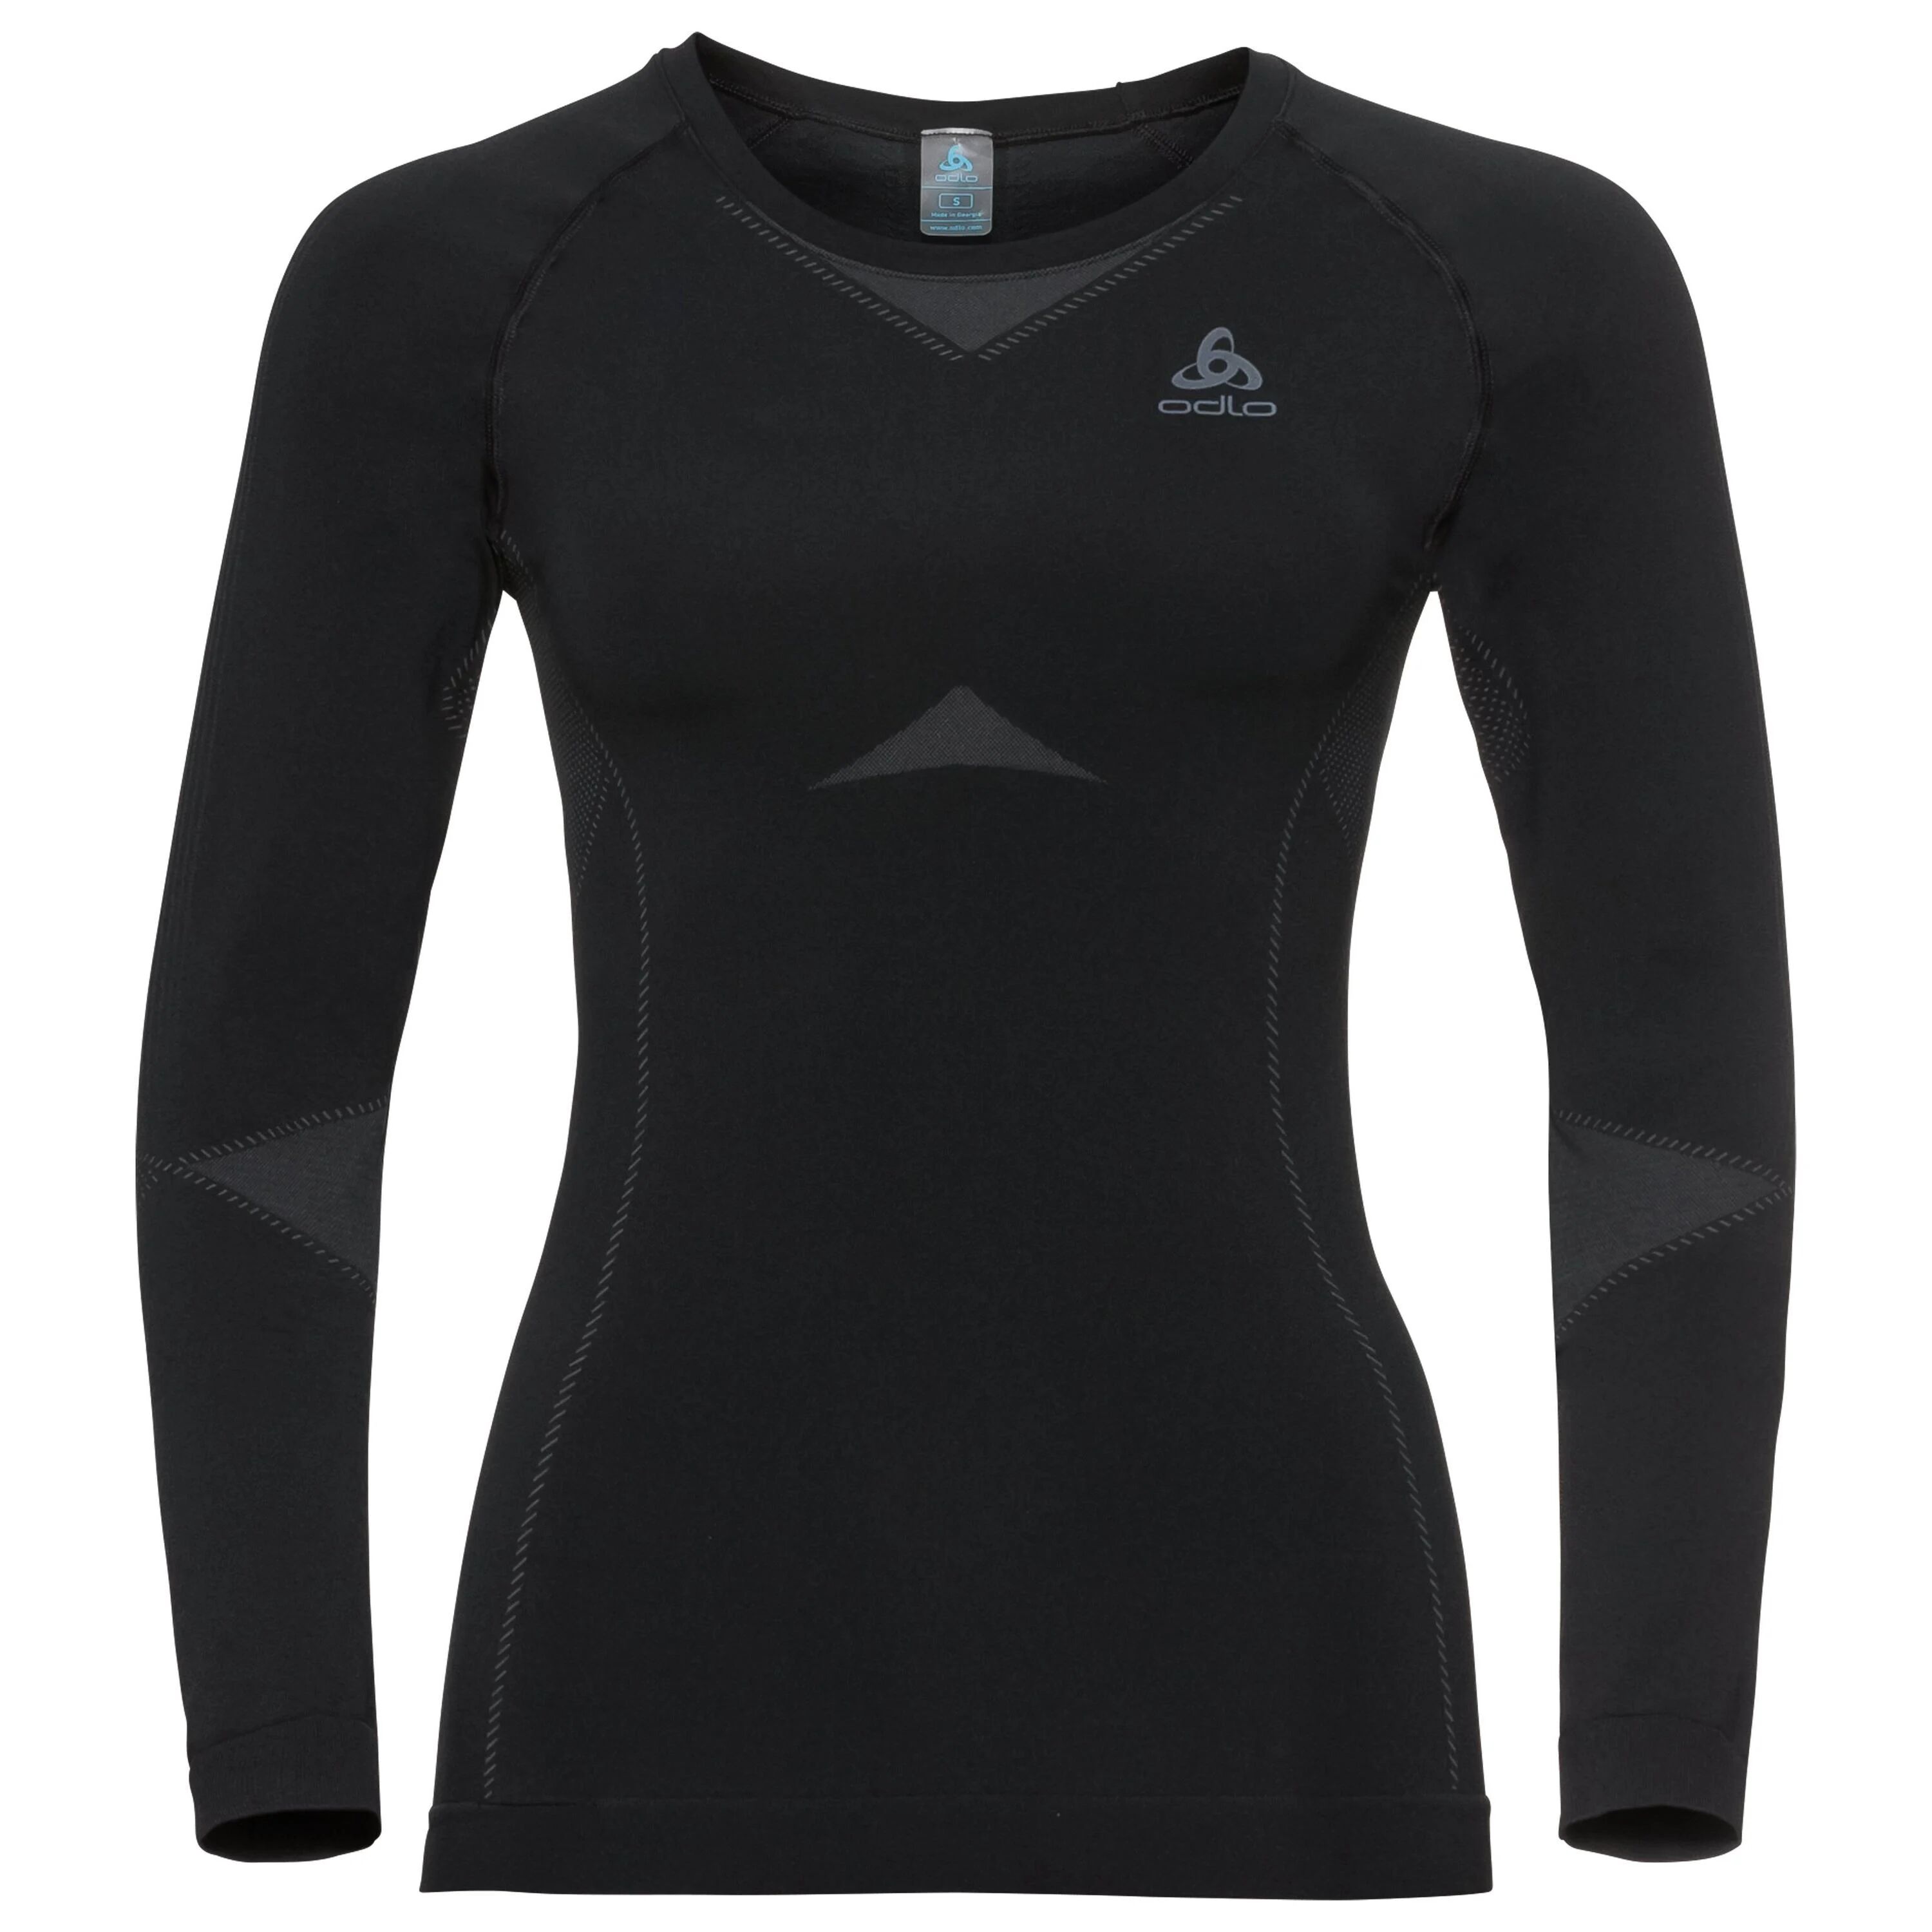 Odlo Damen PERFORMANCE EVOLUTION Sportunterwäsche Langarm-Shirt, female, black - odlo graphite grey, XS